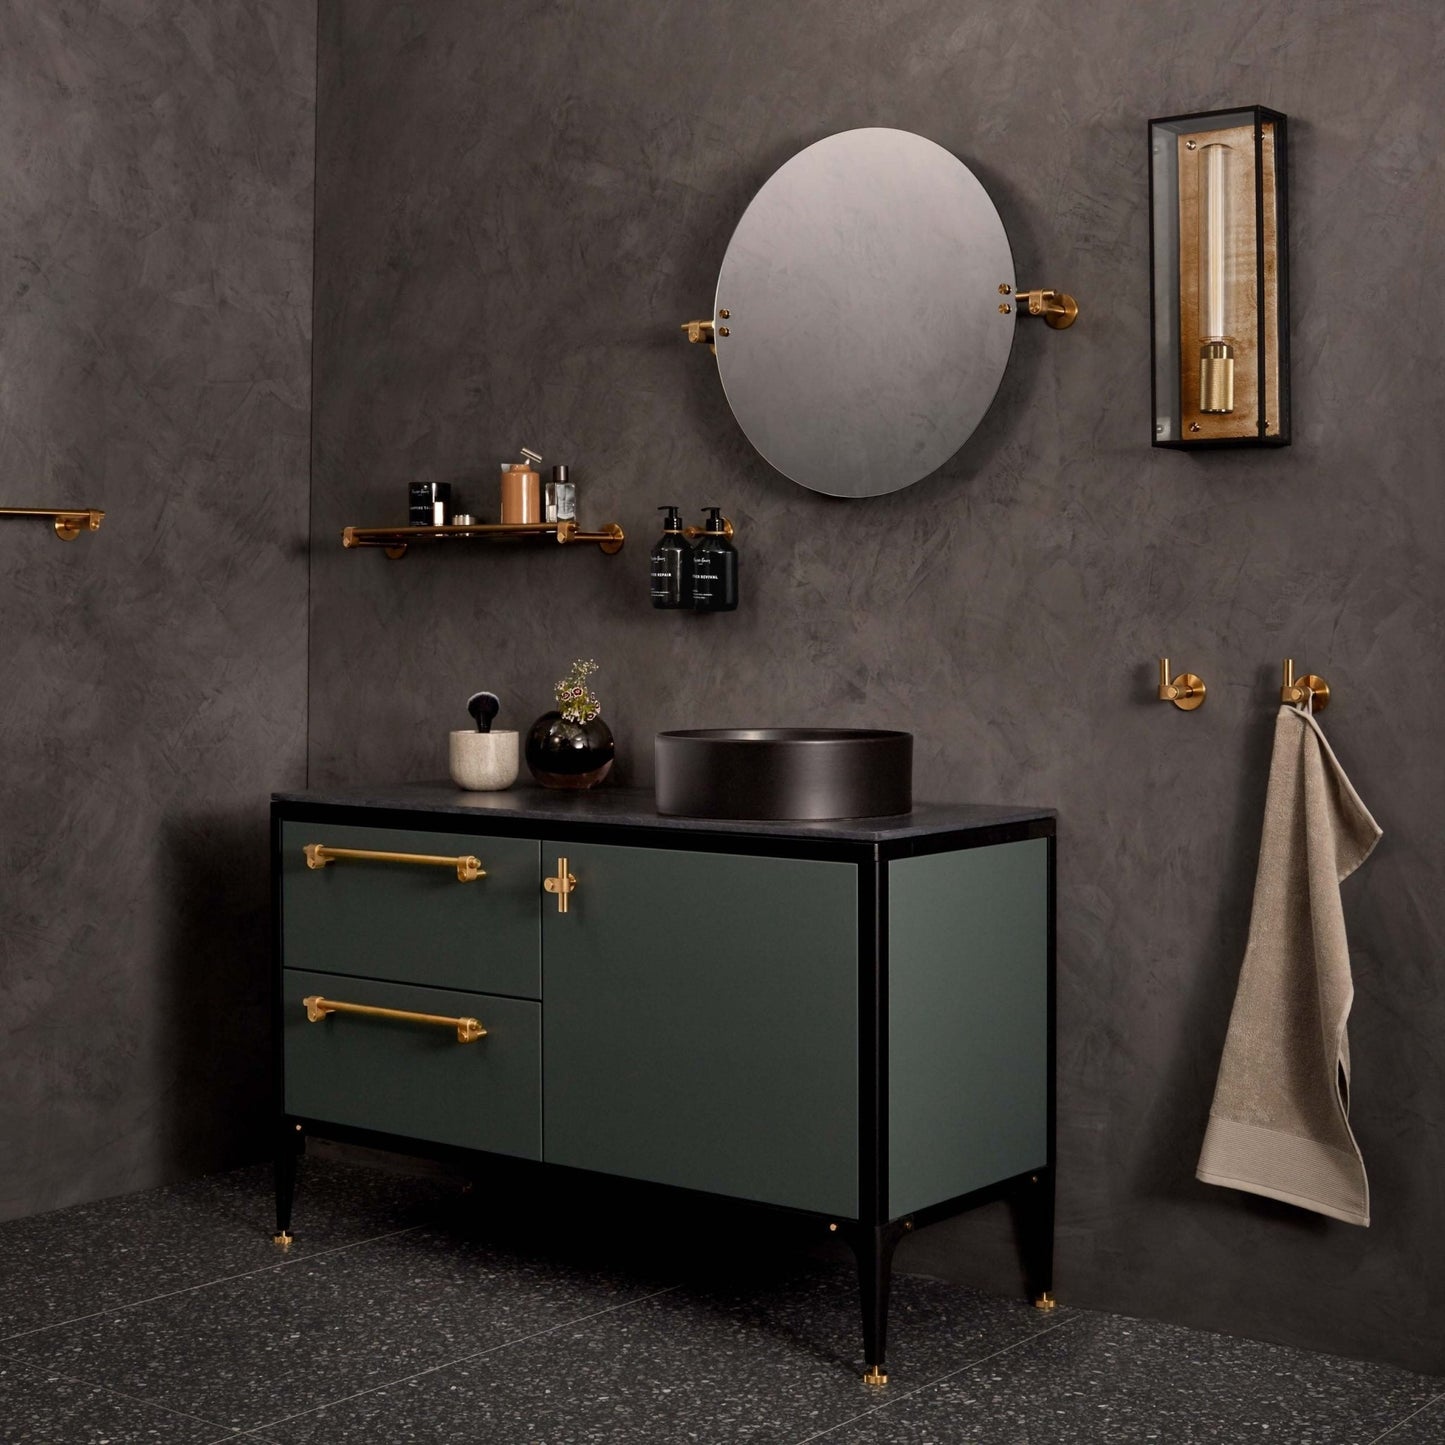 Liquid Soap or Shower Get Industrial Holder / Brass - |VESIMI Design| Luxury and Rustic bathrooms online